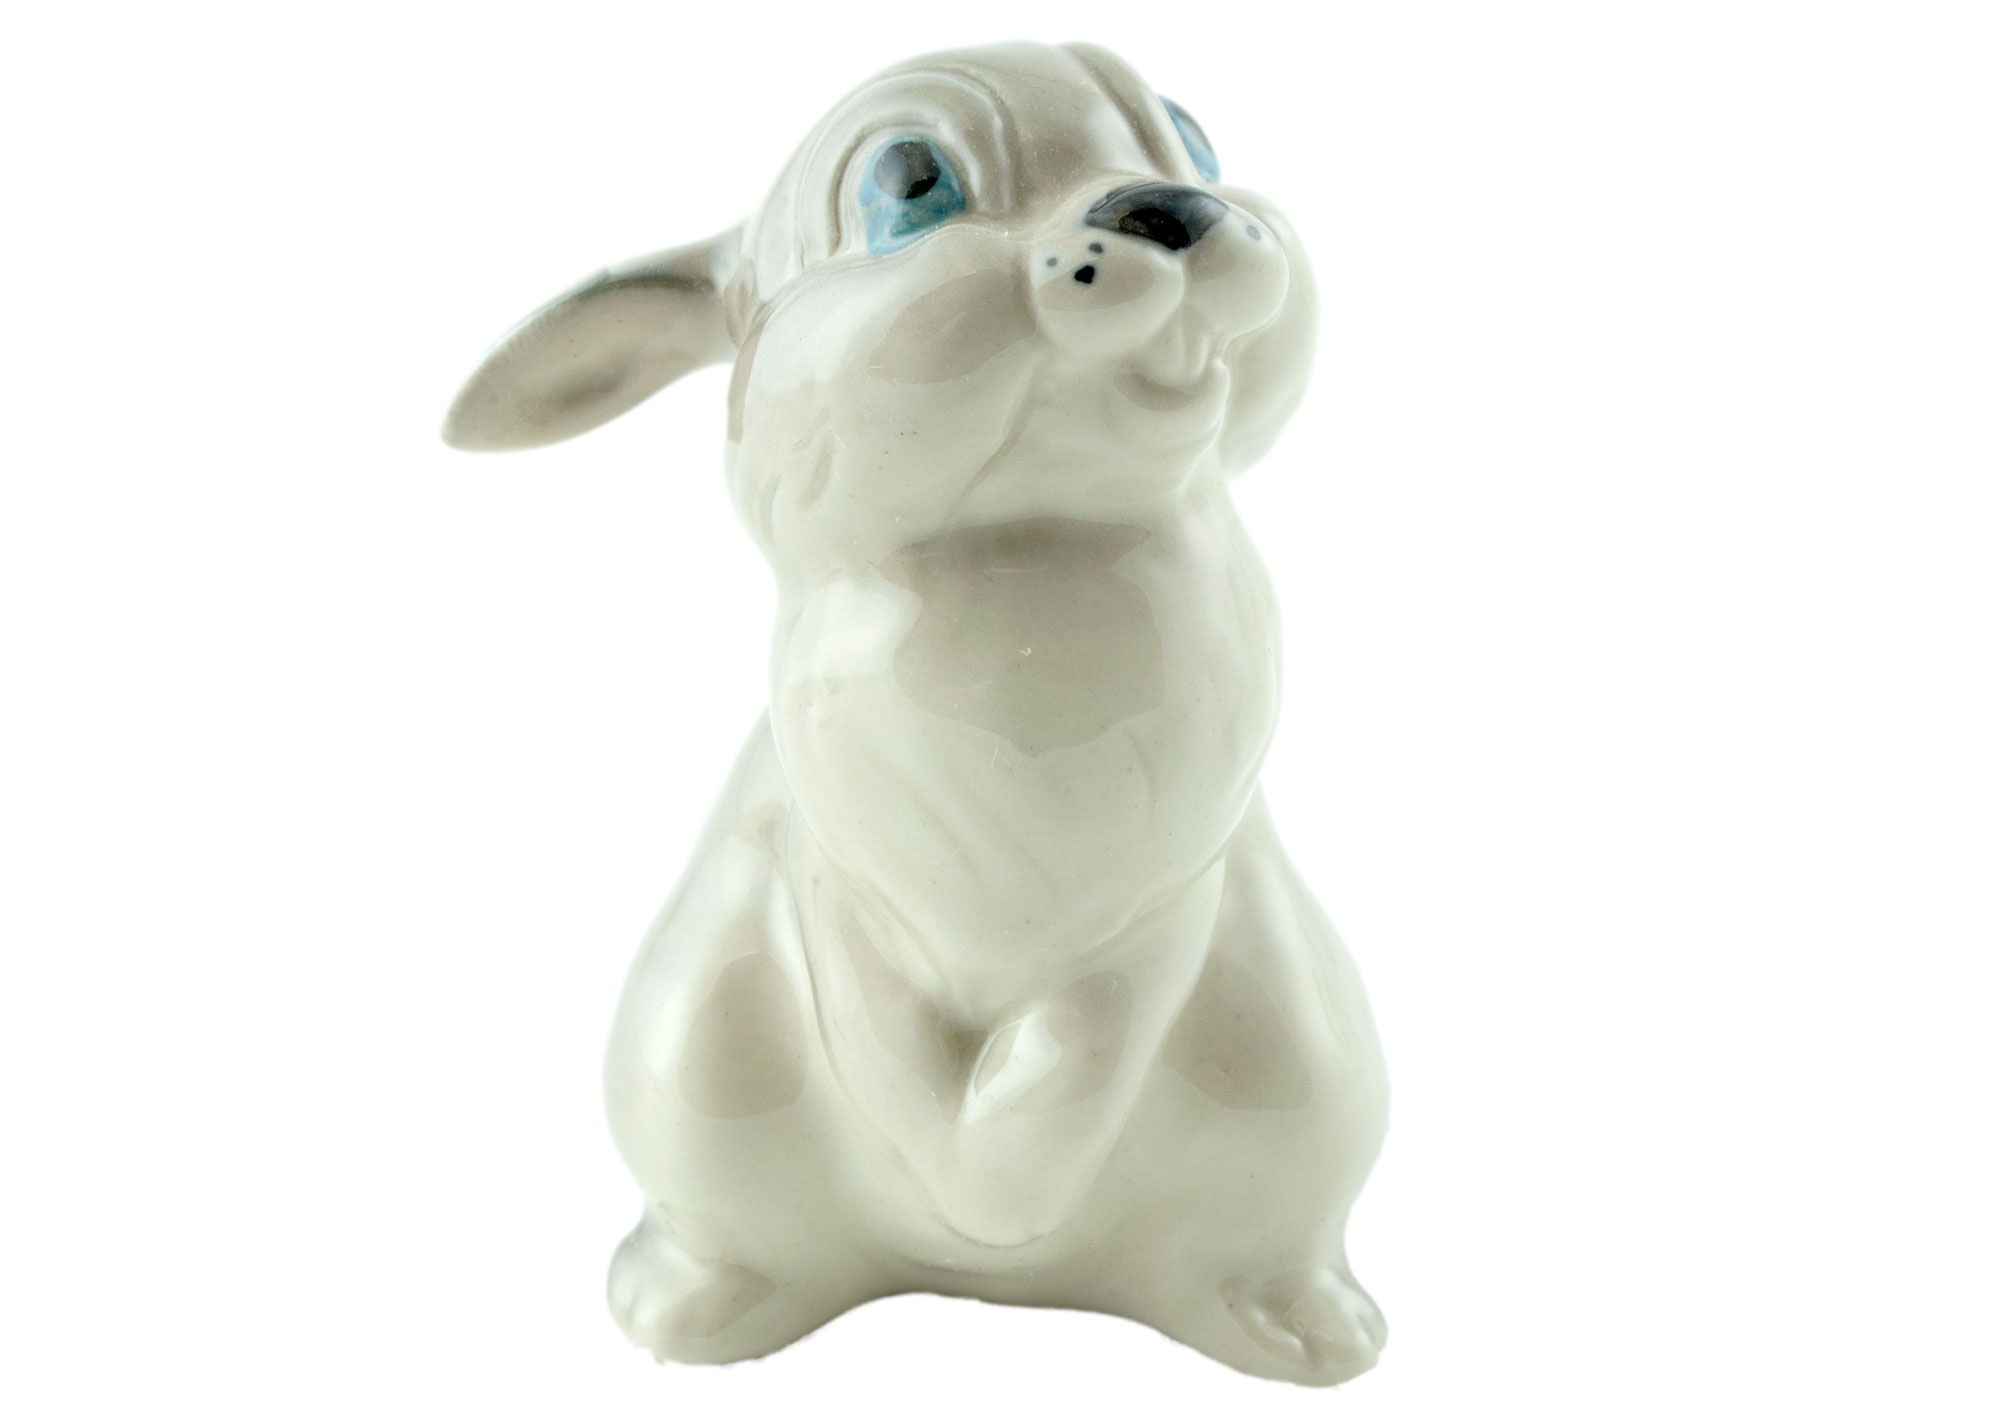 Buy Rabbit Porcelain Figurine at GoldenCockerel.com